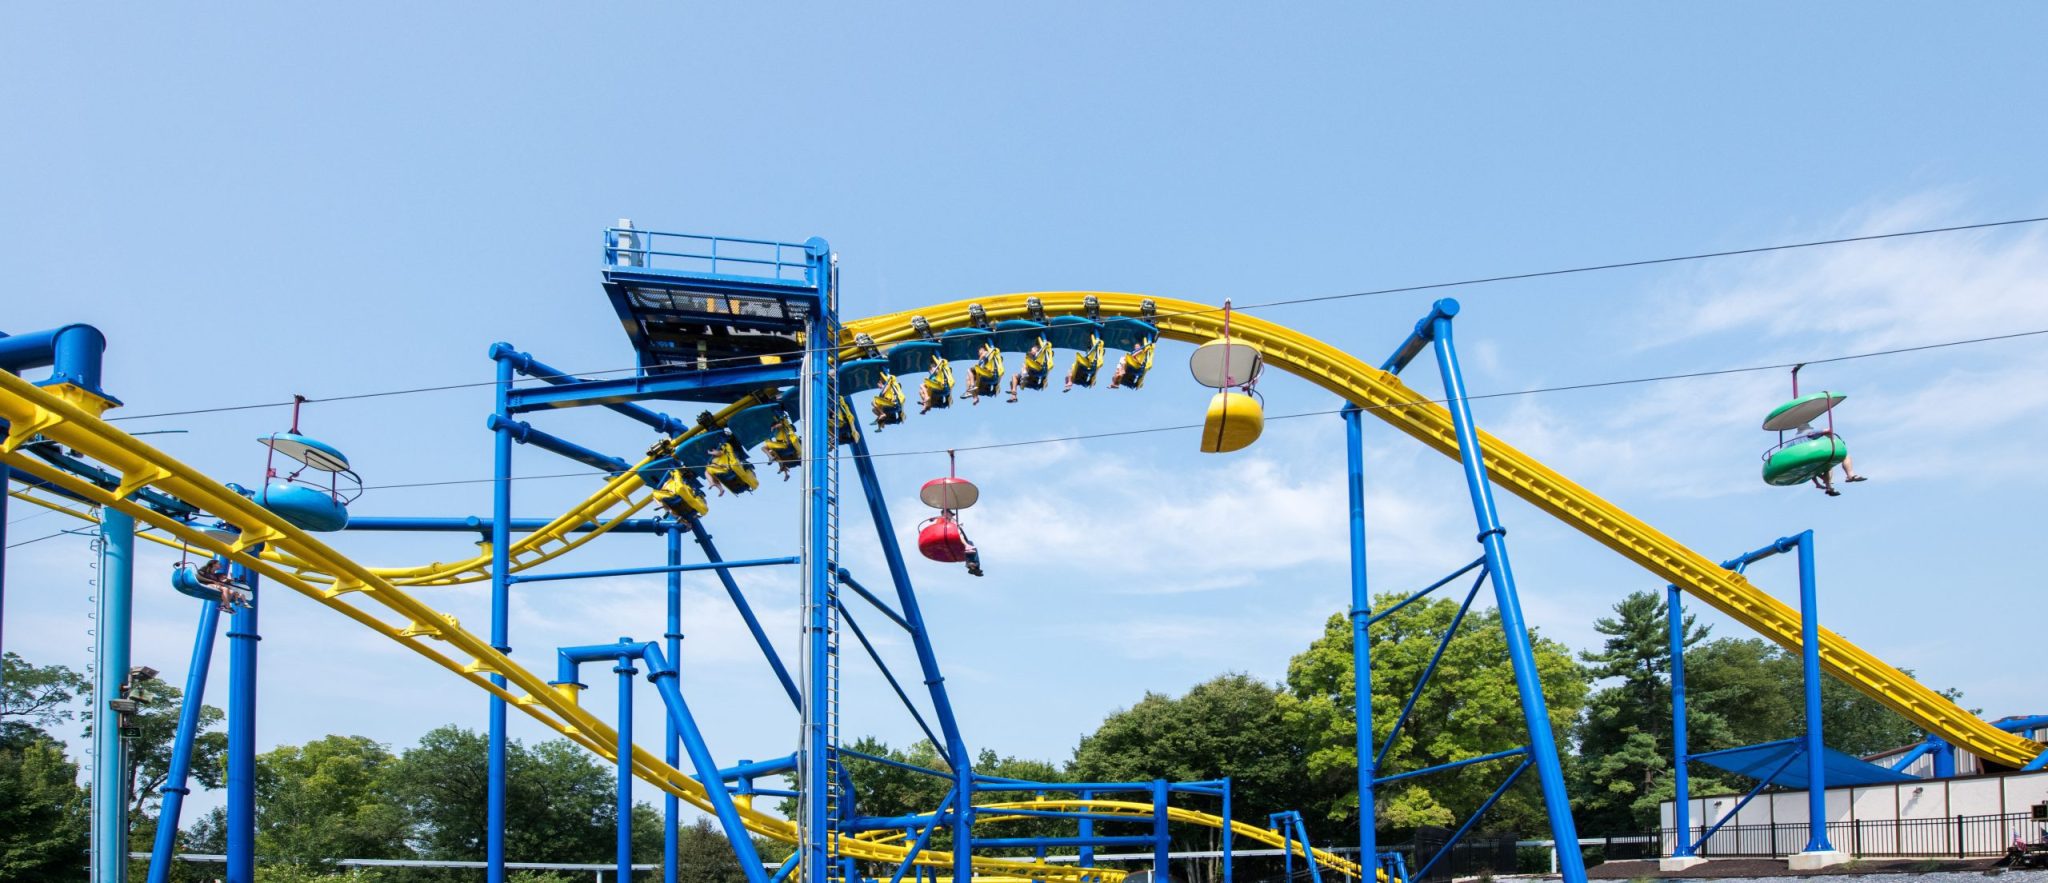 Pennsylvania amusement park to receive region's first dive roller coaster